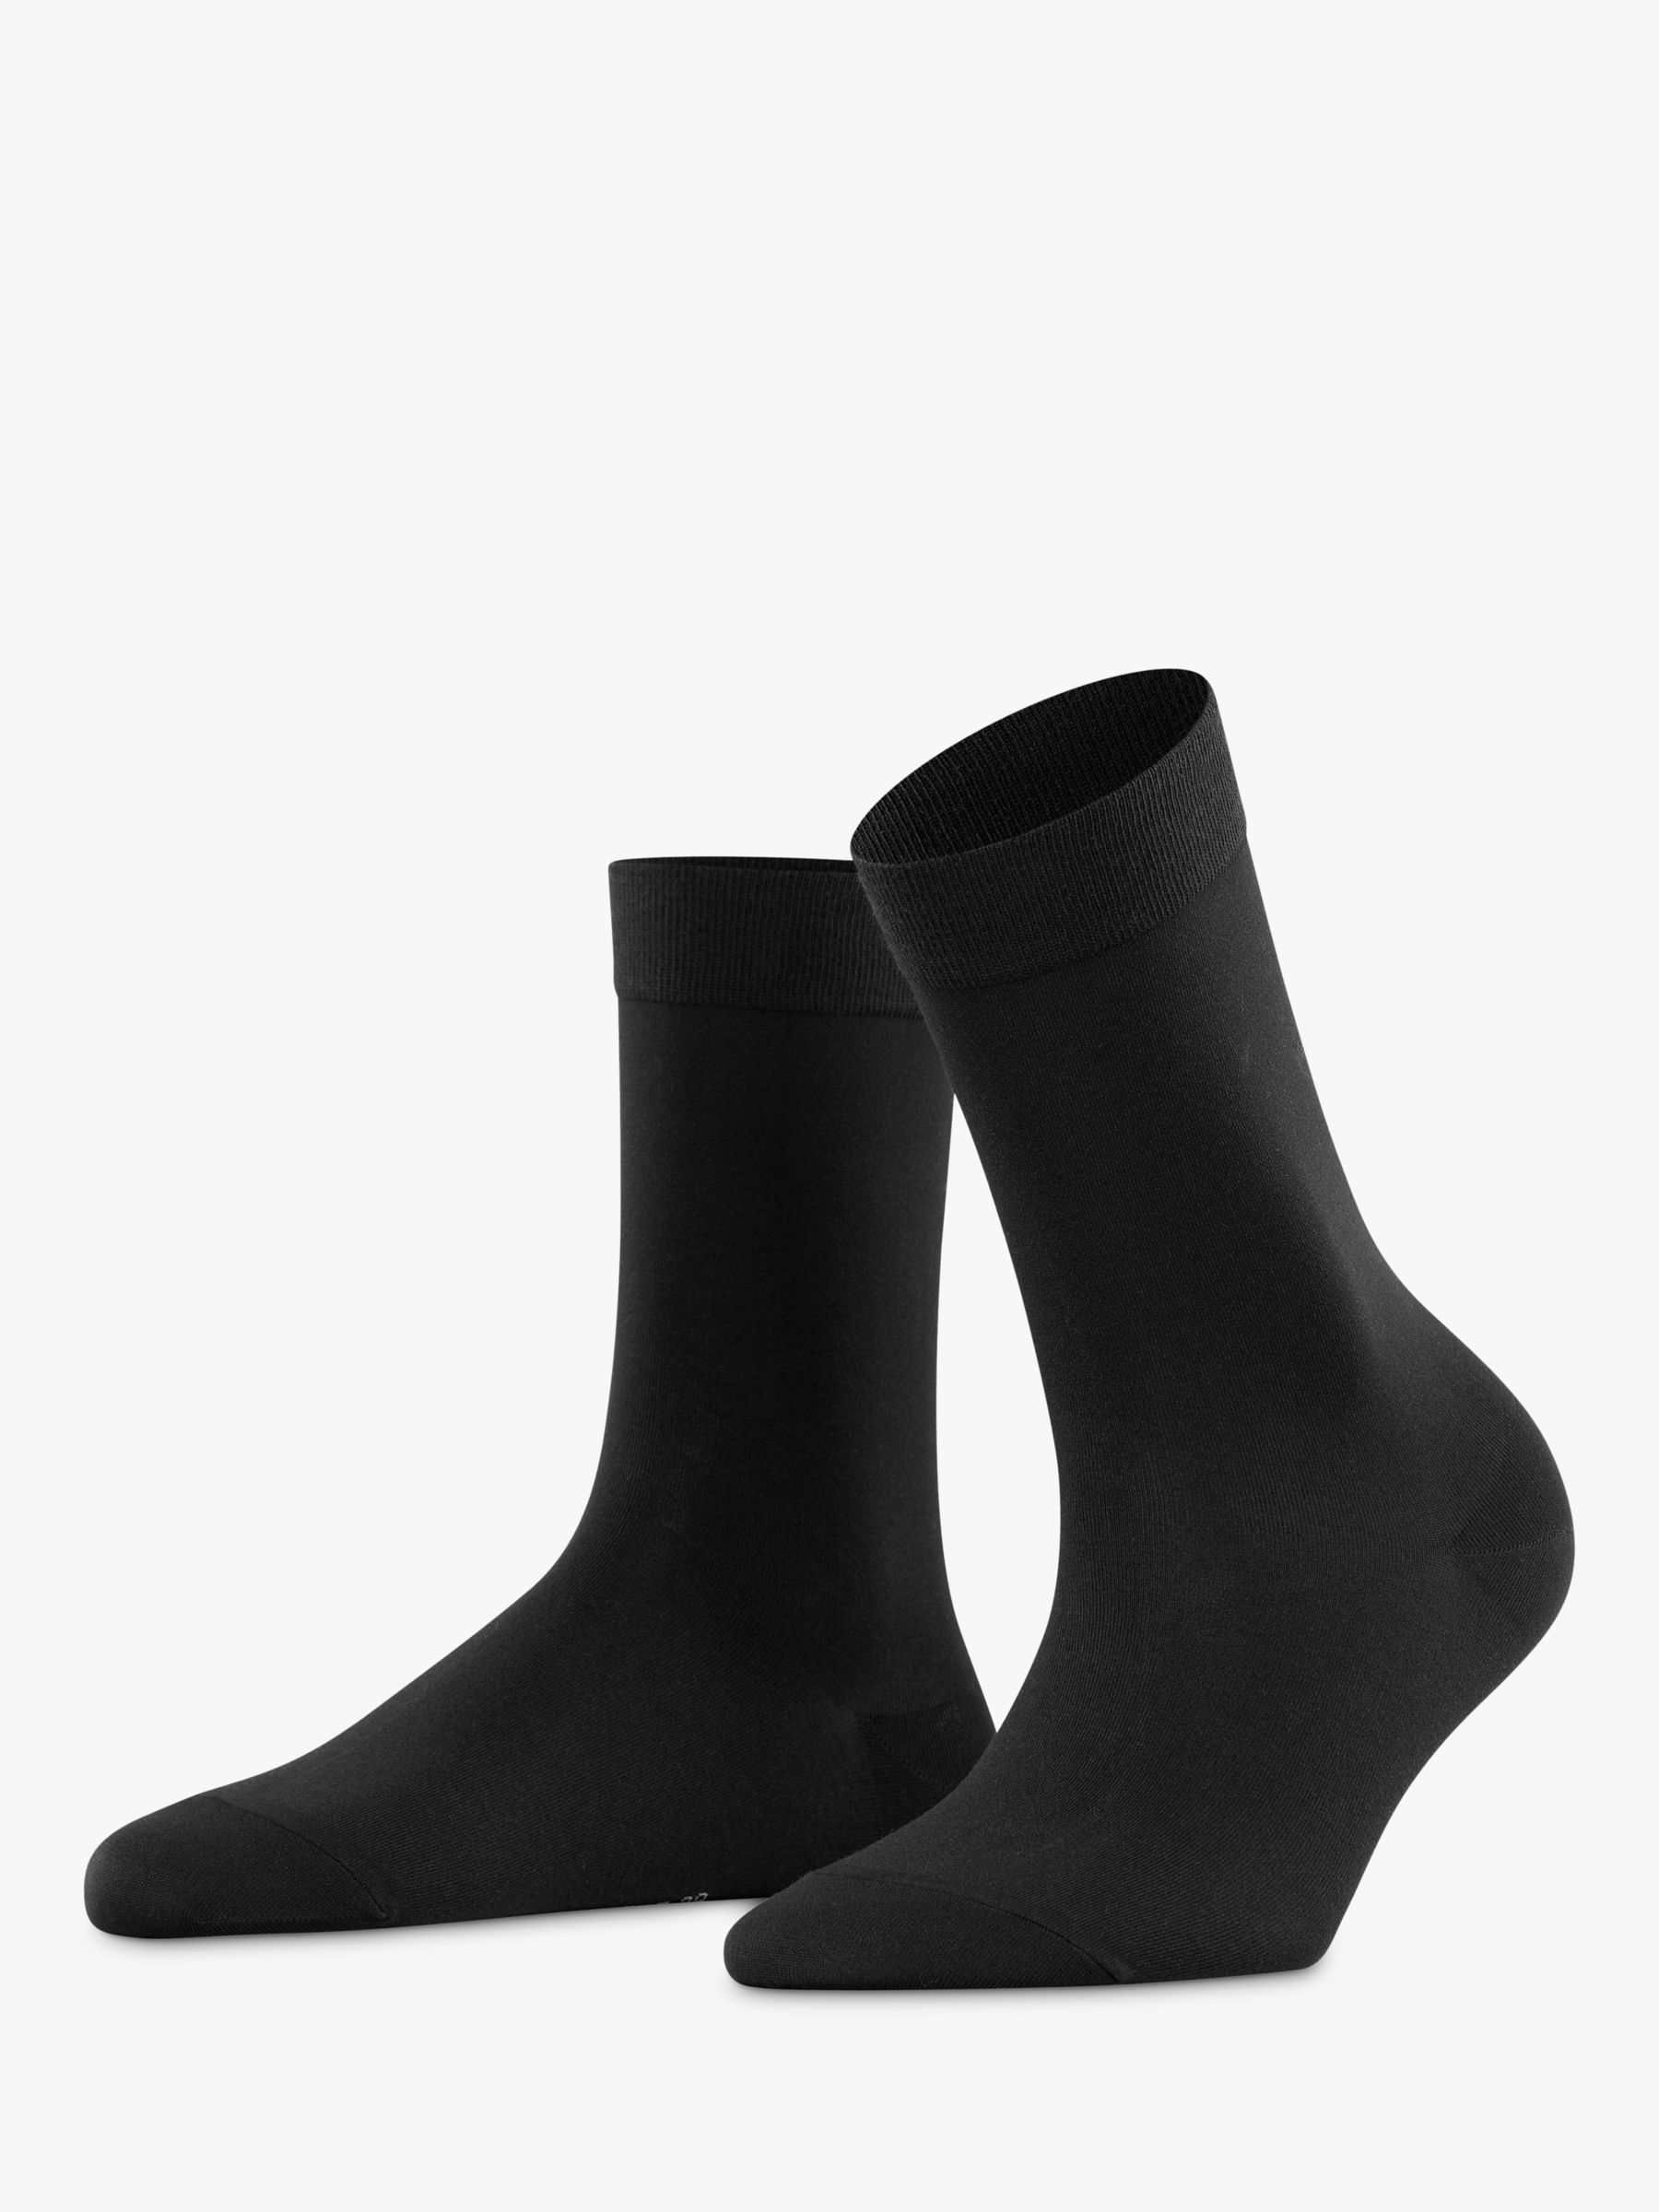 FALKE Cotton Touch Ankle Socks, Black at John Lewis & Partners